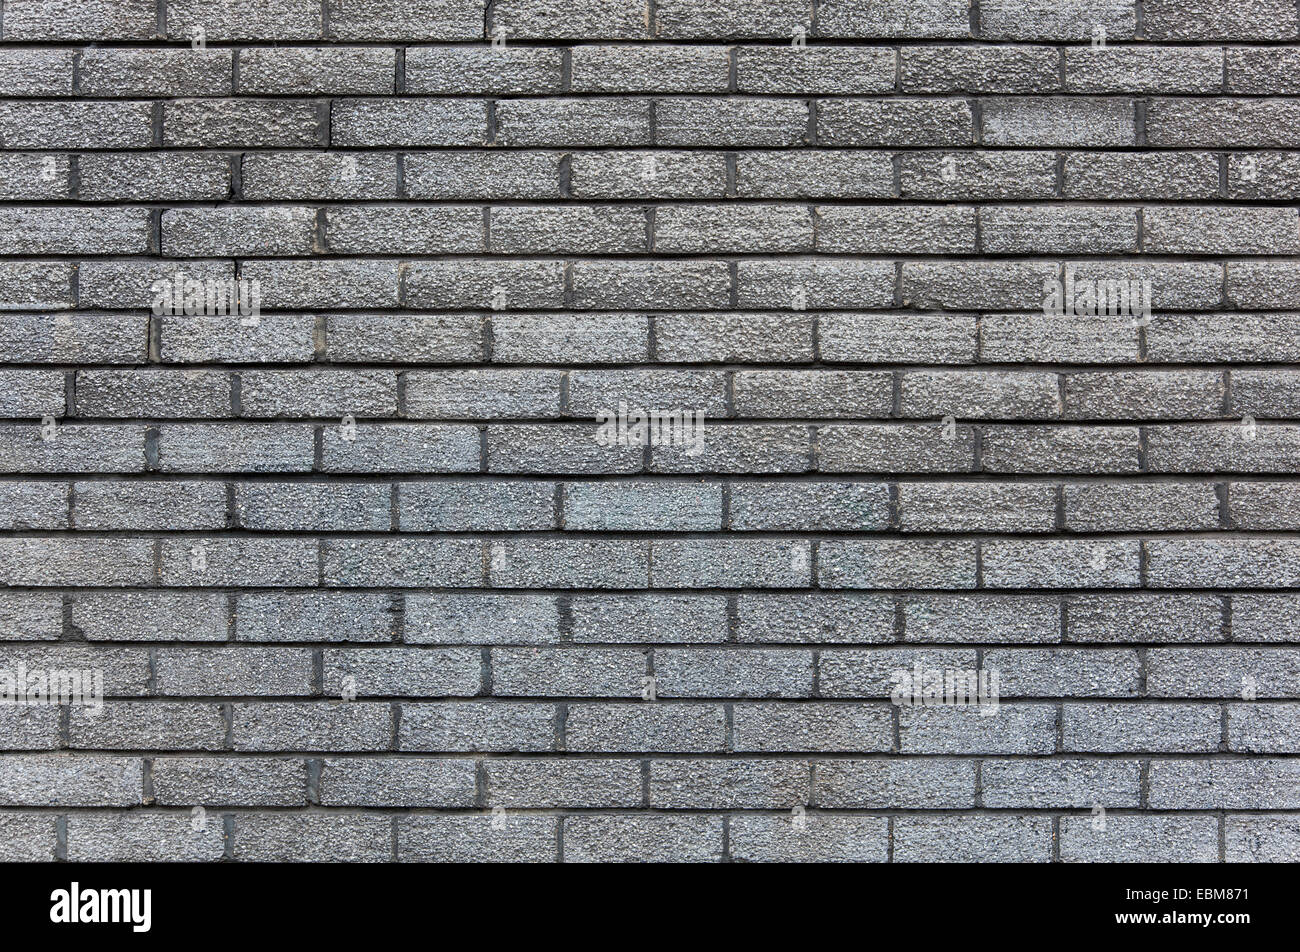 Uniform grey brick pattern Stock Photo